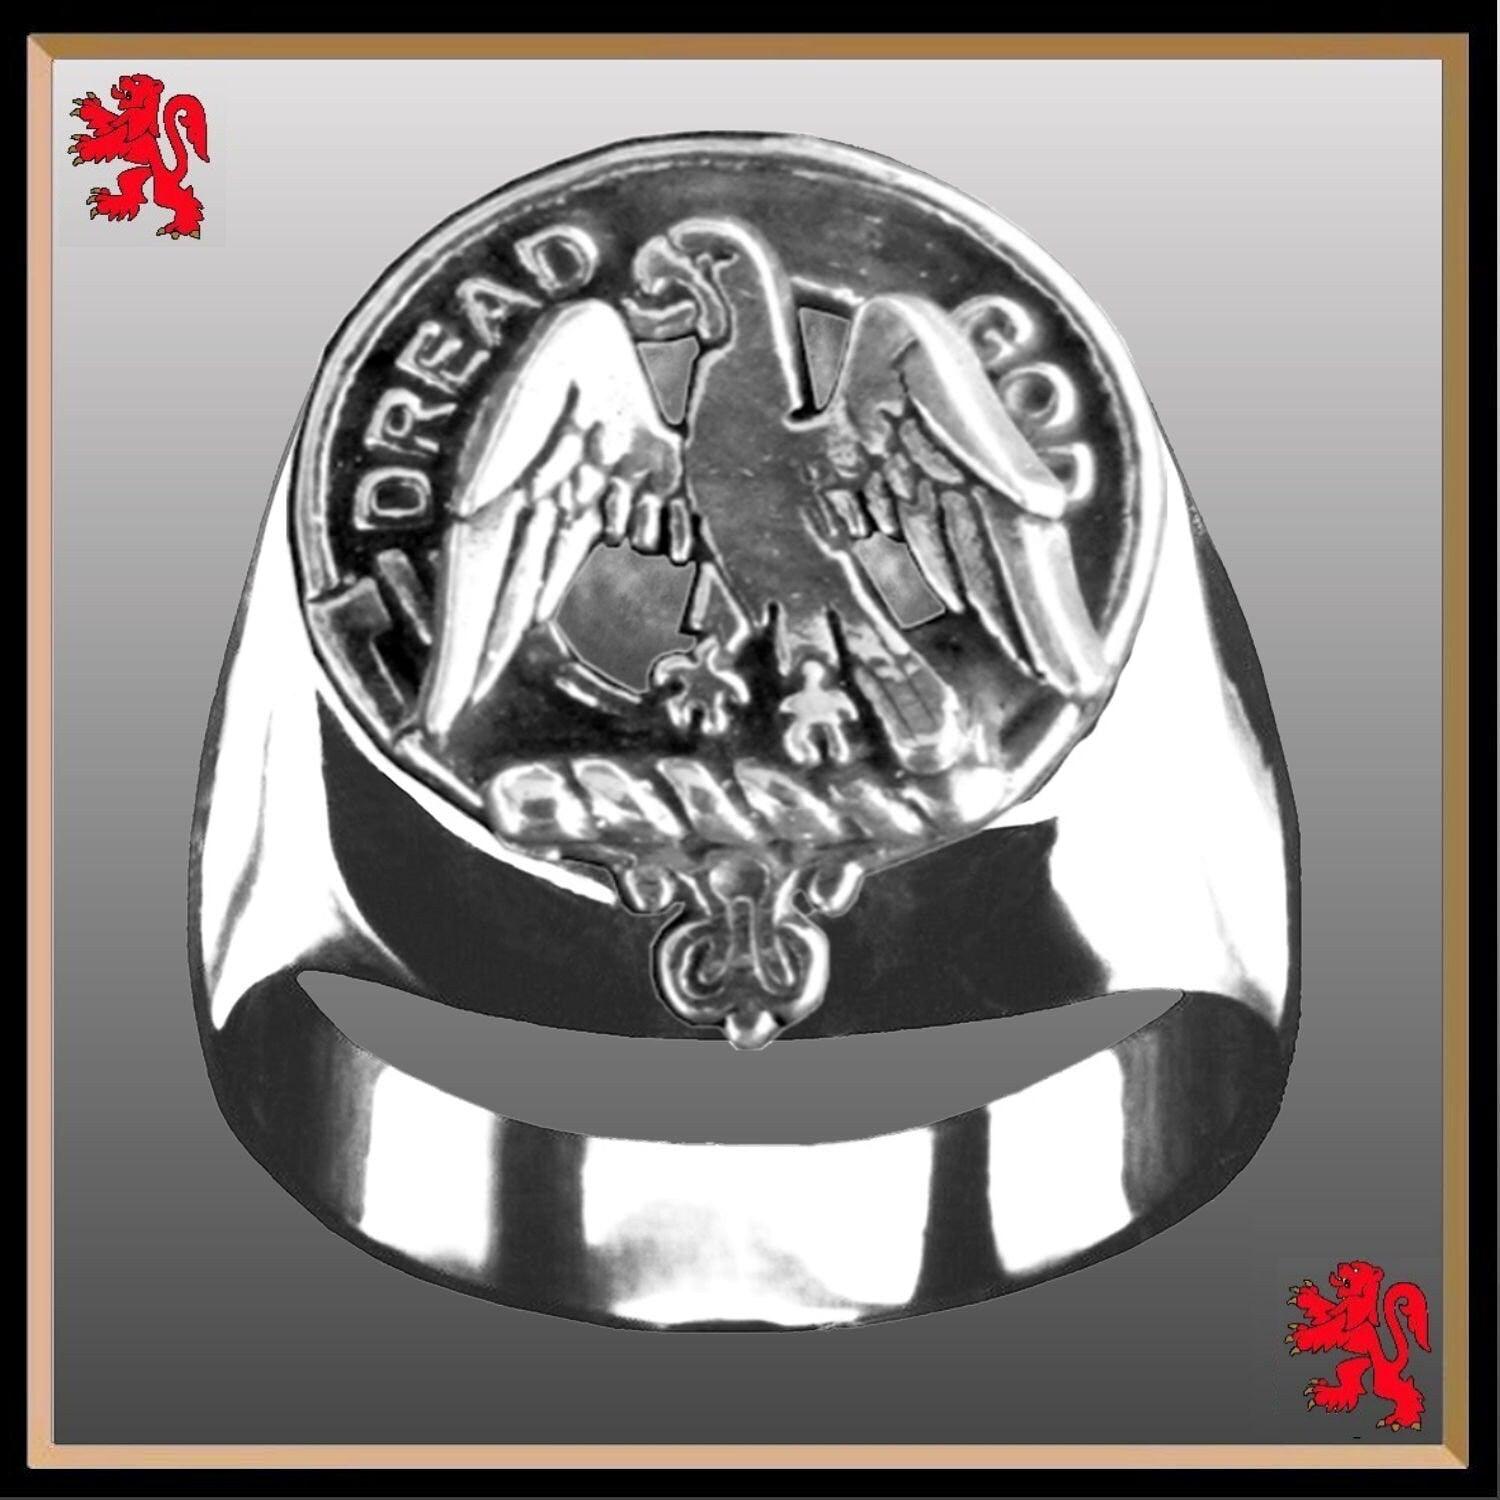 Munro Scottish Clan Crest Ring GC100  ~  Sterling Silver and Karat Gold